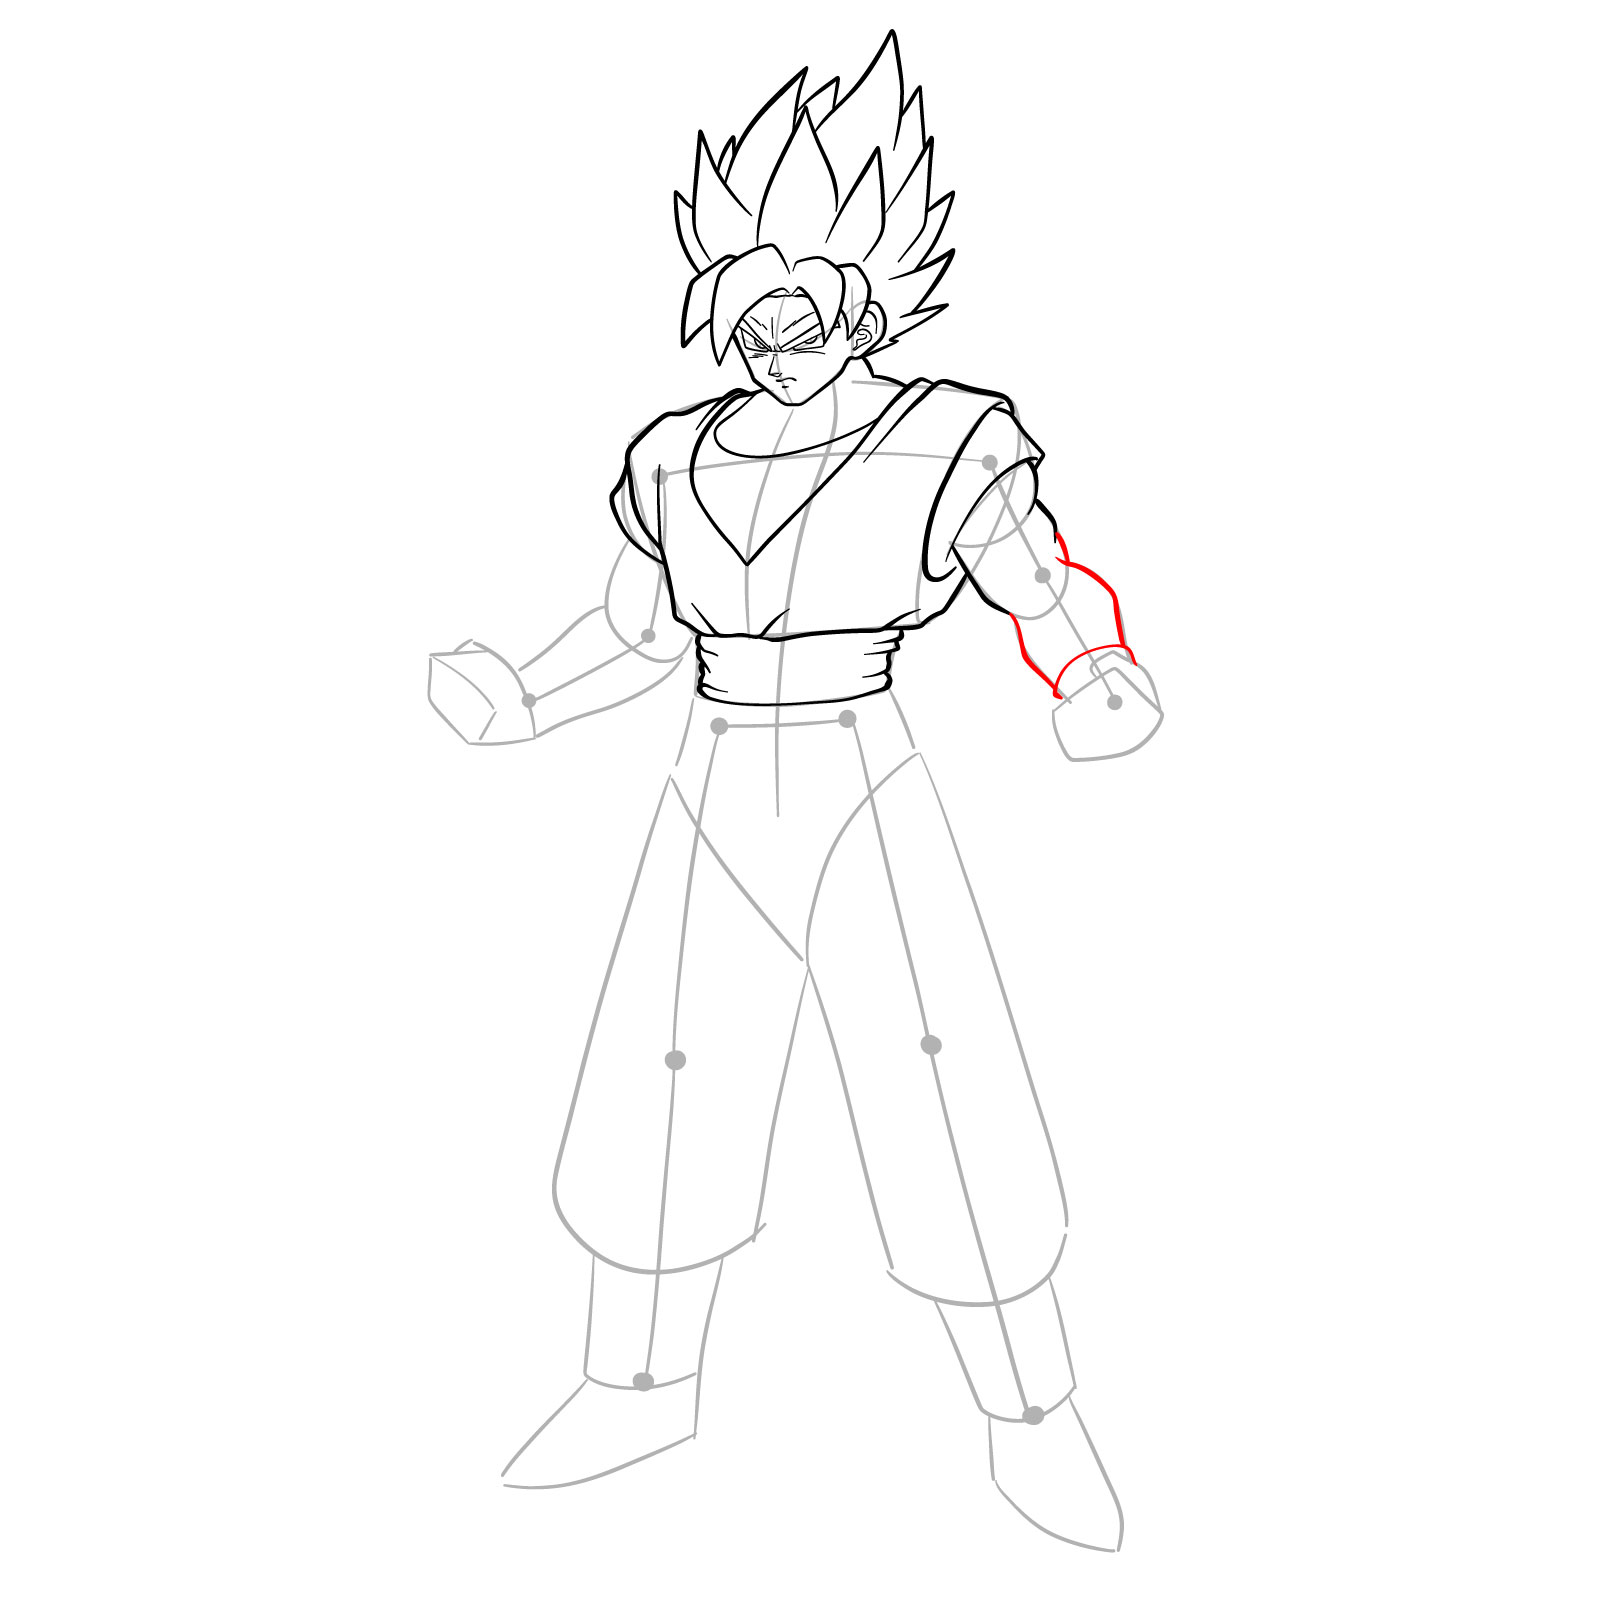 How to draw Goku in Super Saiyan form - step 22